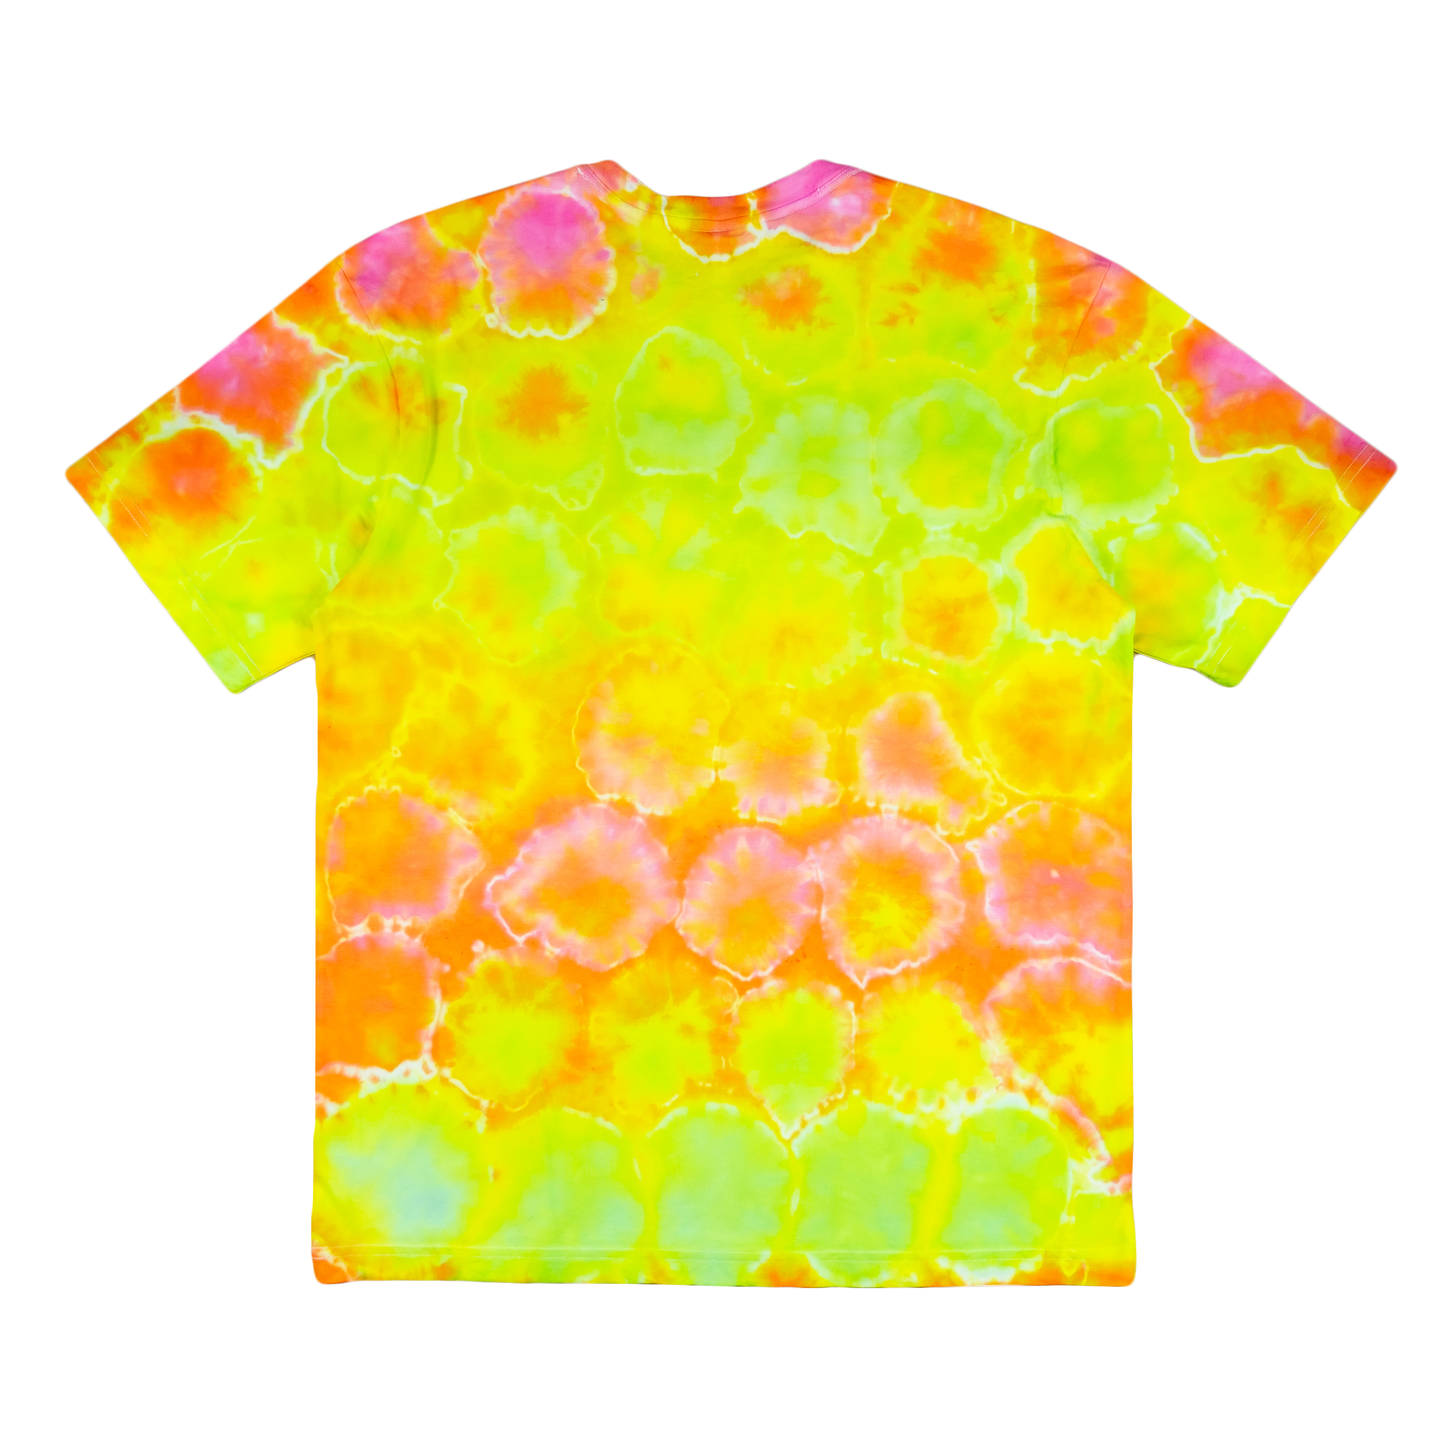 Ne-Maki Shibori T-Shirt Supima (XL)